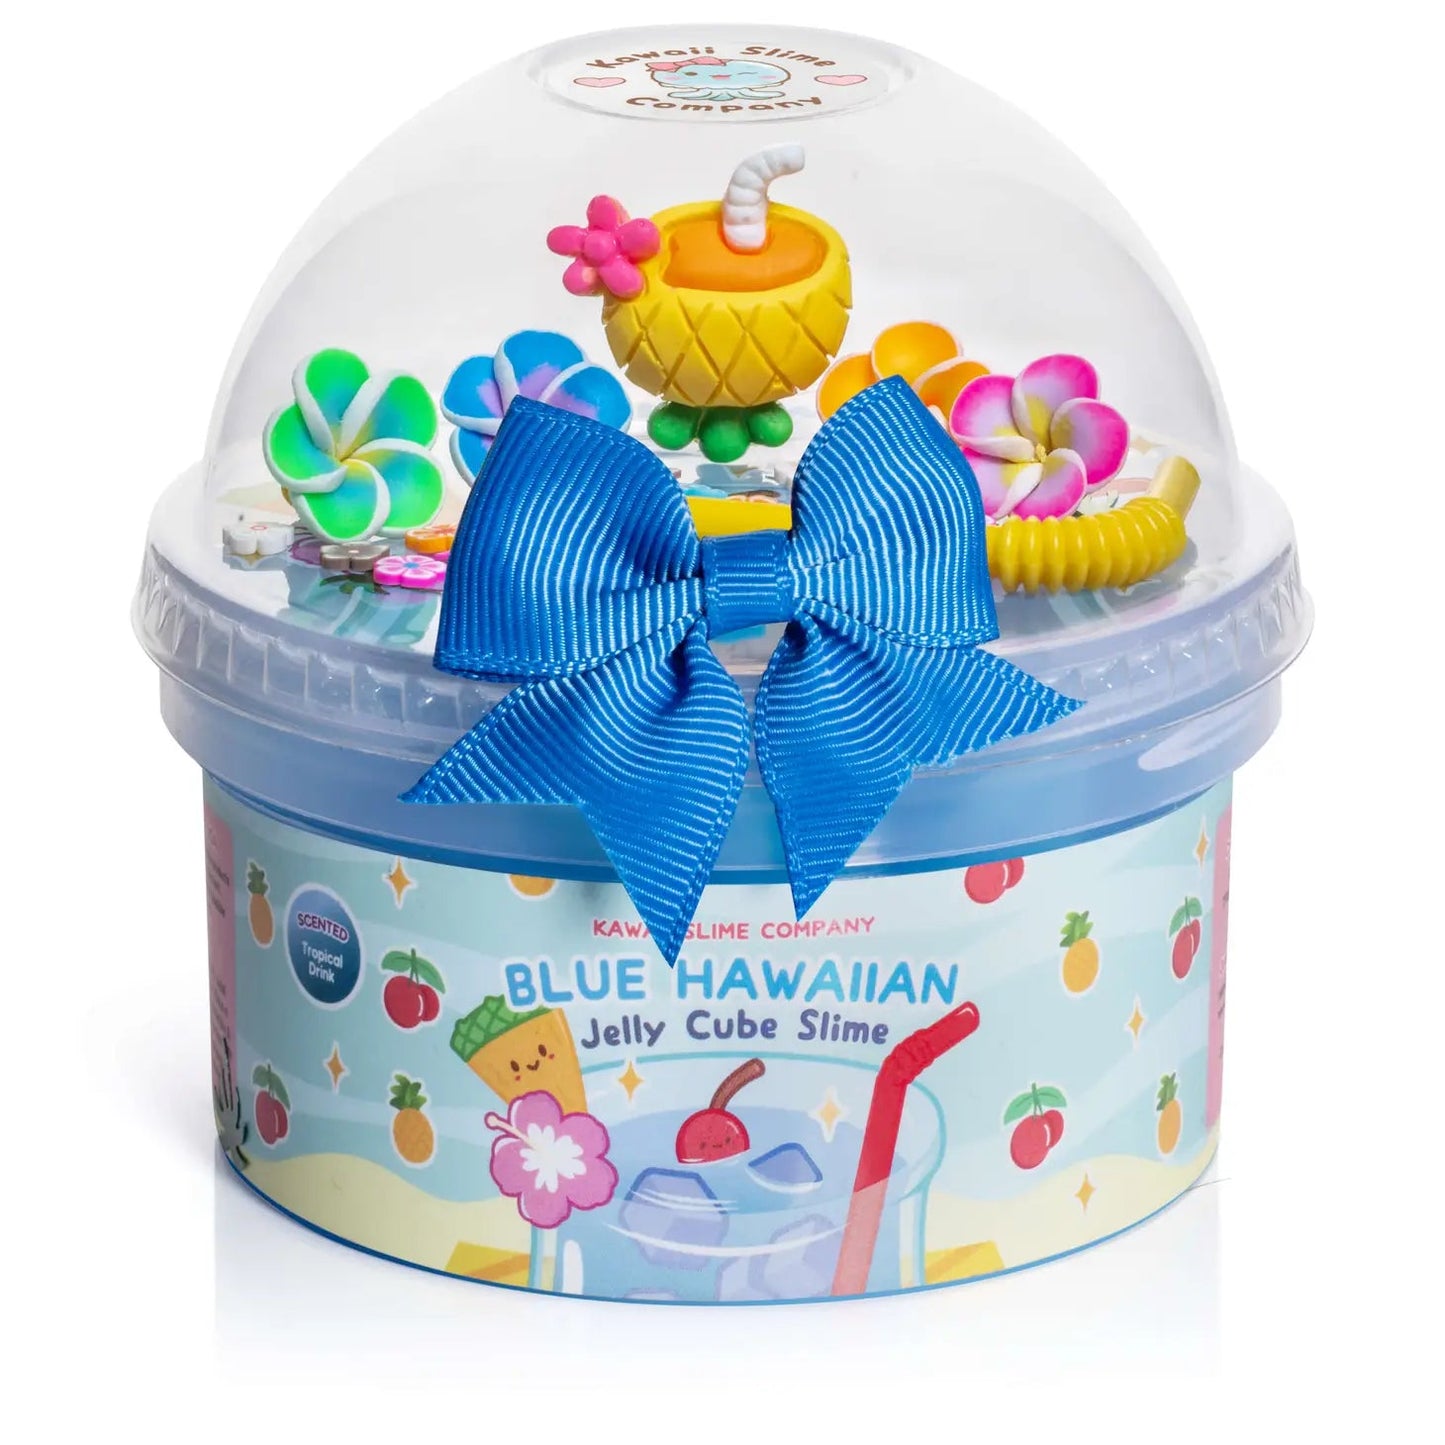 Blue Hawaiian Jelly Cube Slime 196 TOYS CHILD Kawaii Slime Company 